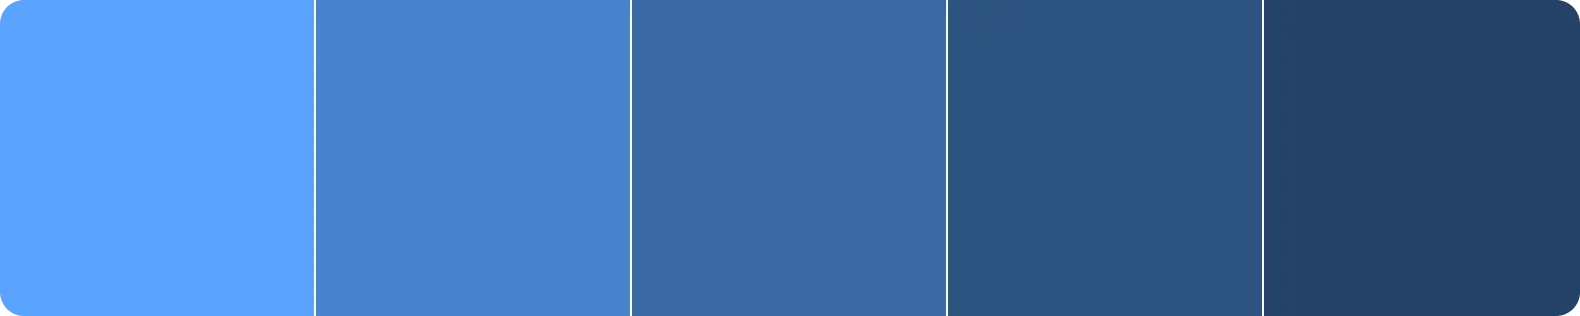 Color palette showing different sades of the same color of blue.